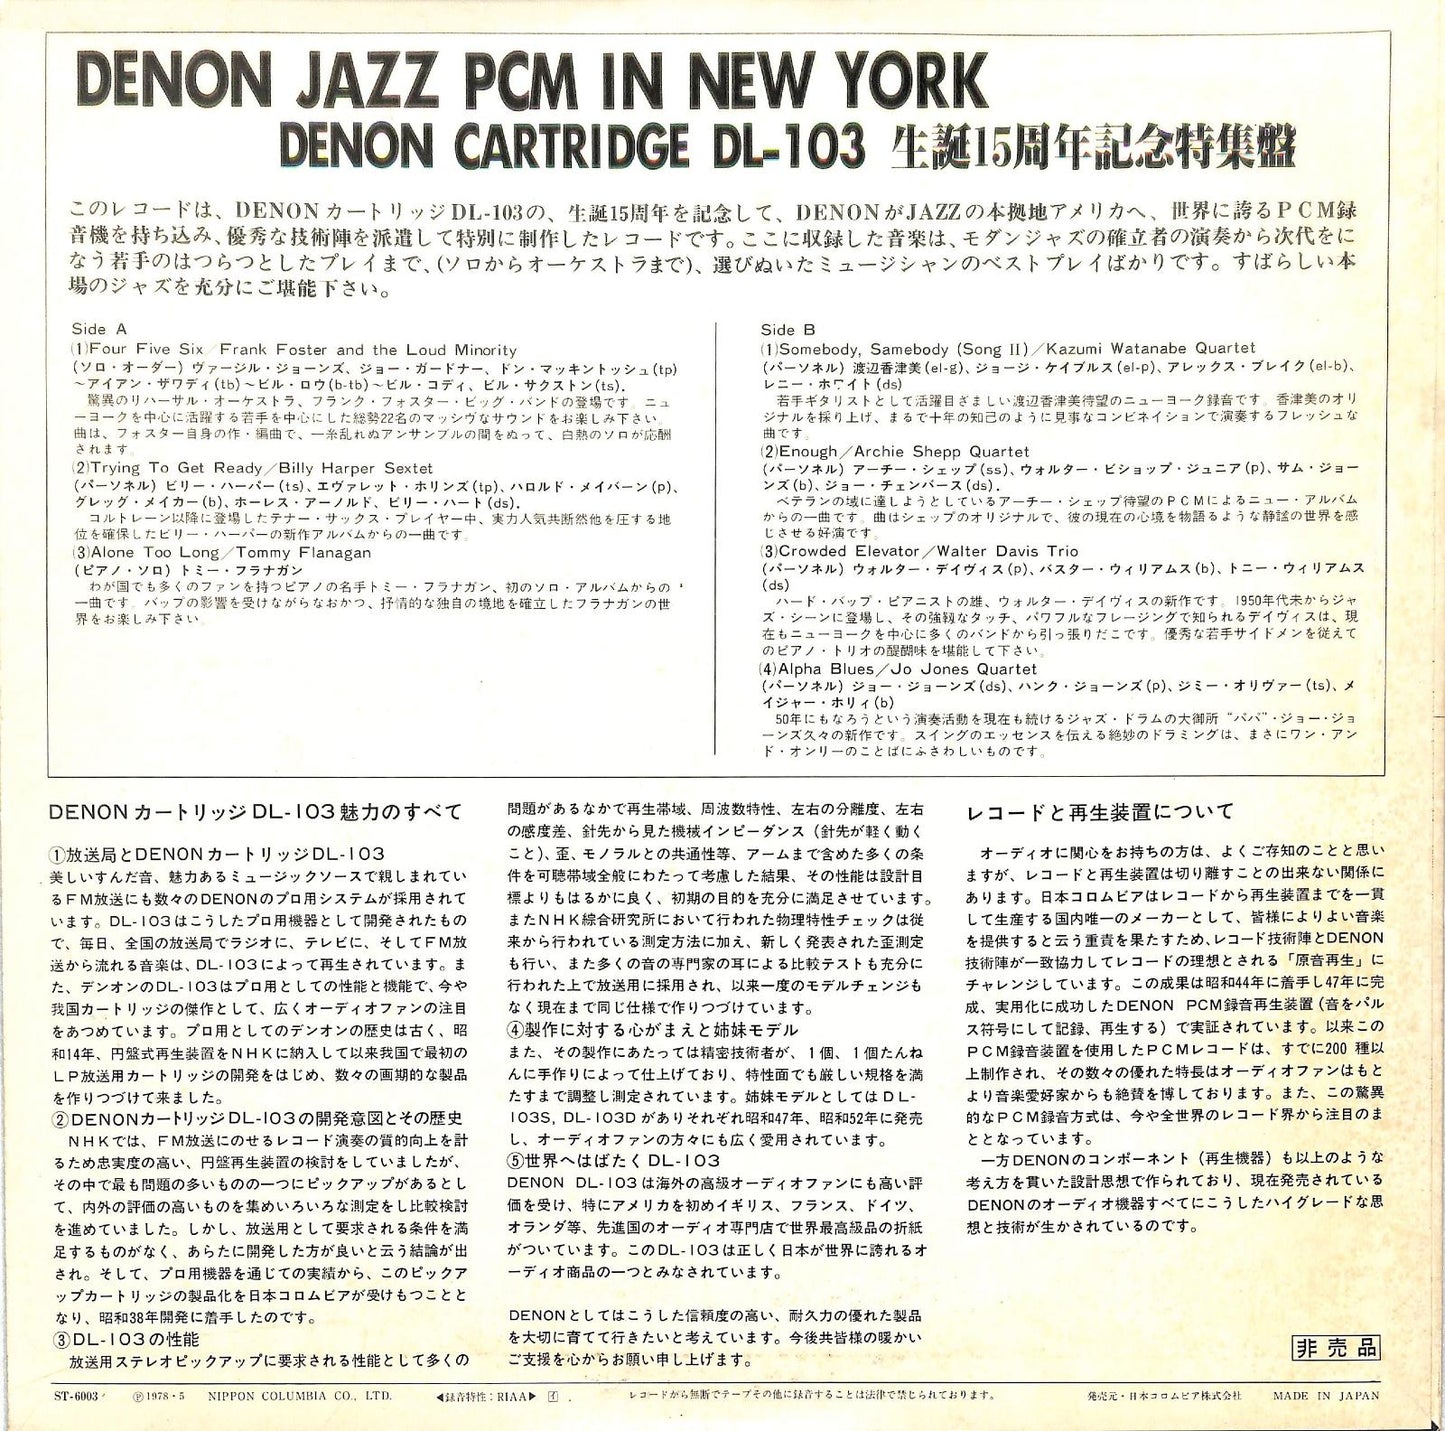 Various Artists - Denon Jazz In New York